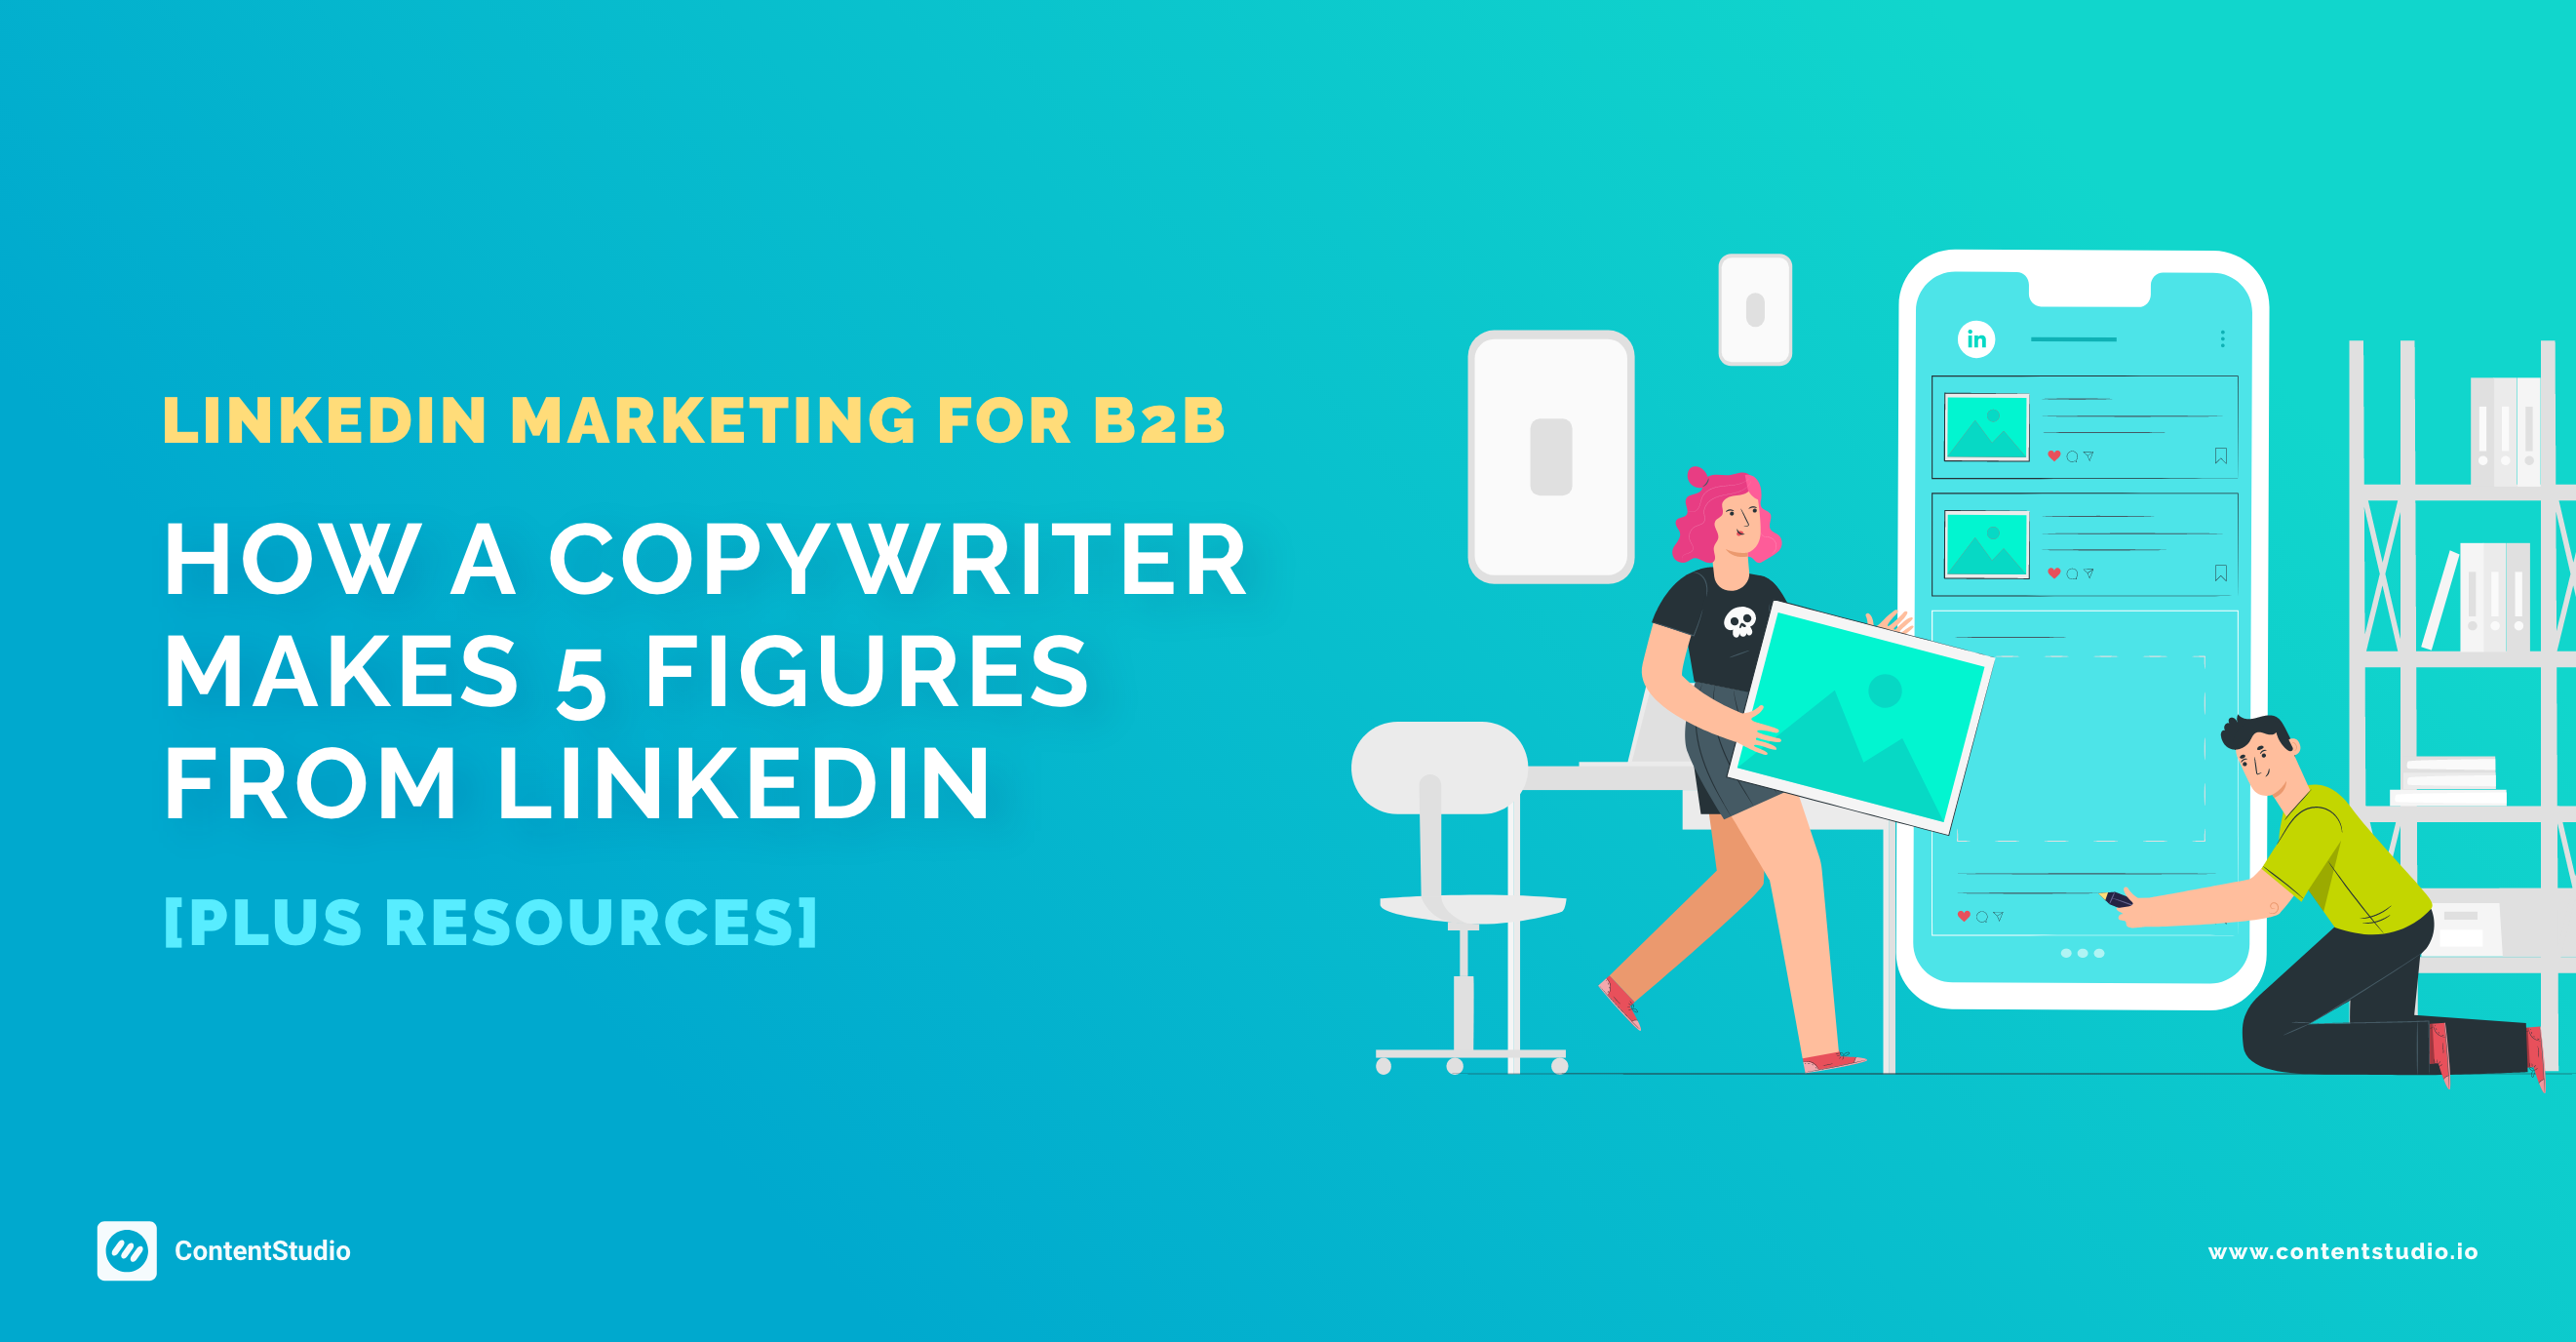 LinkedIn Marketing for B2B – How A Copywriter Makes 5 Figures from LinkedIn